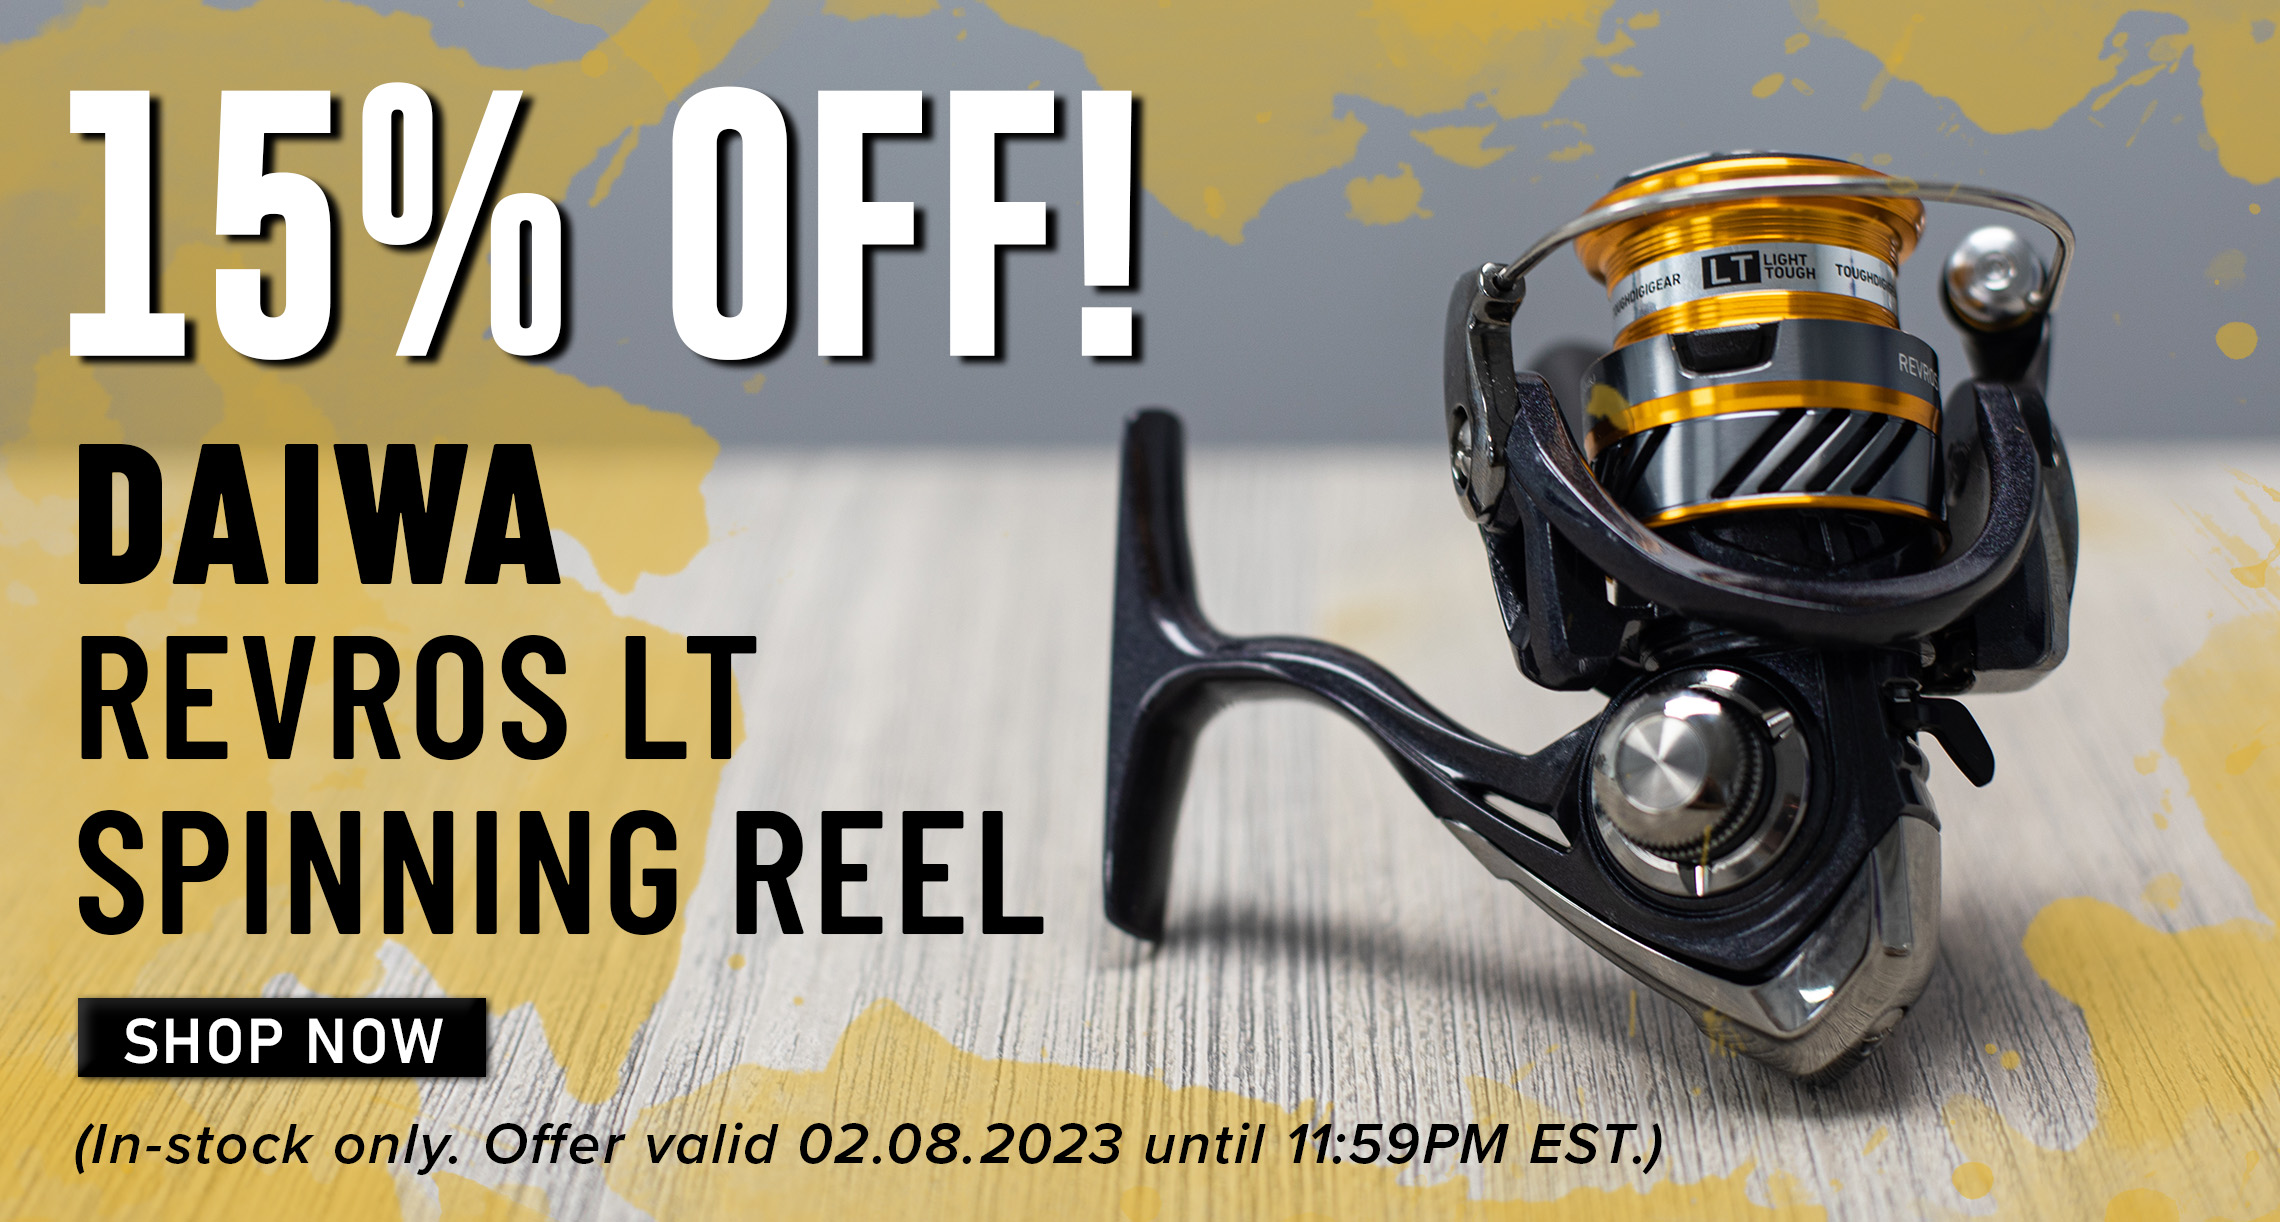 Enjoy Today's Savings on your Favorite Daiwa Reels! - Fish USA